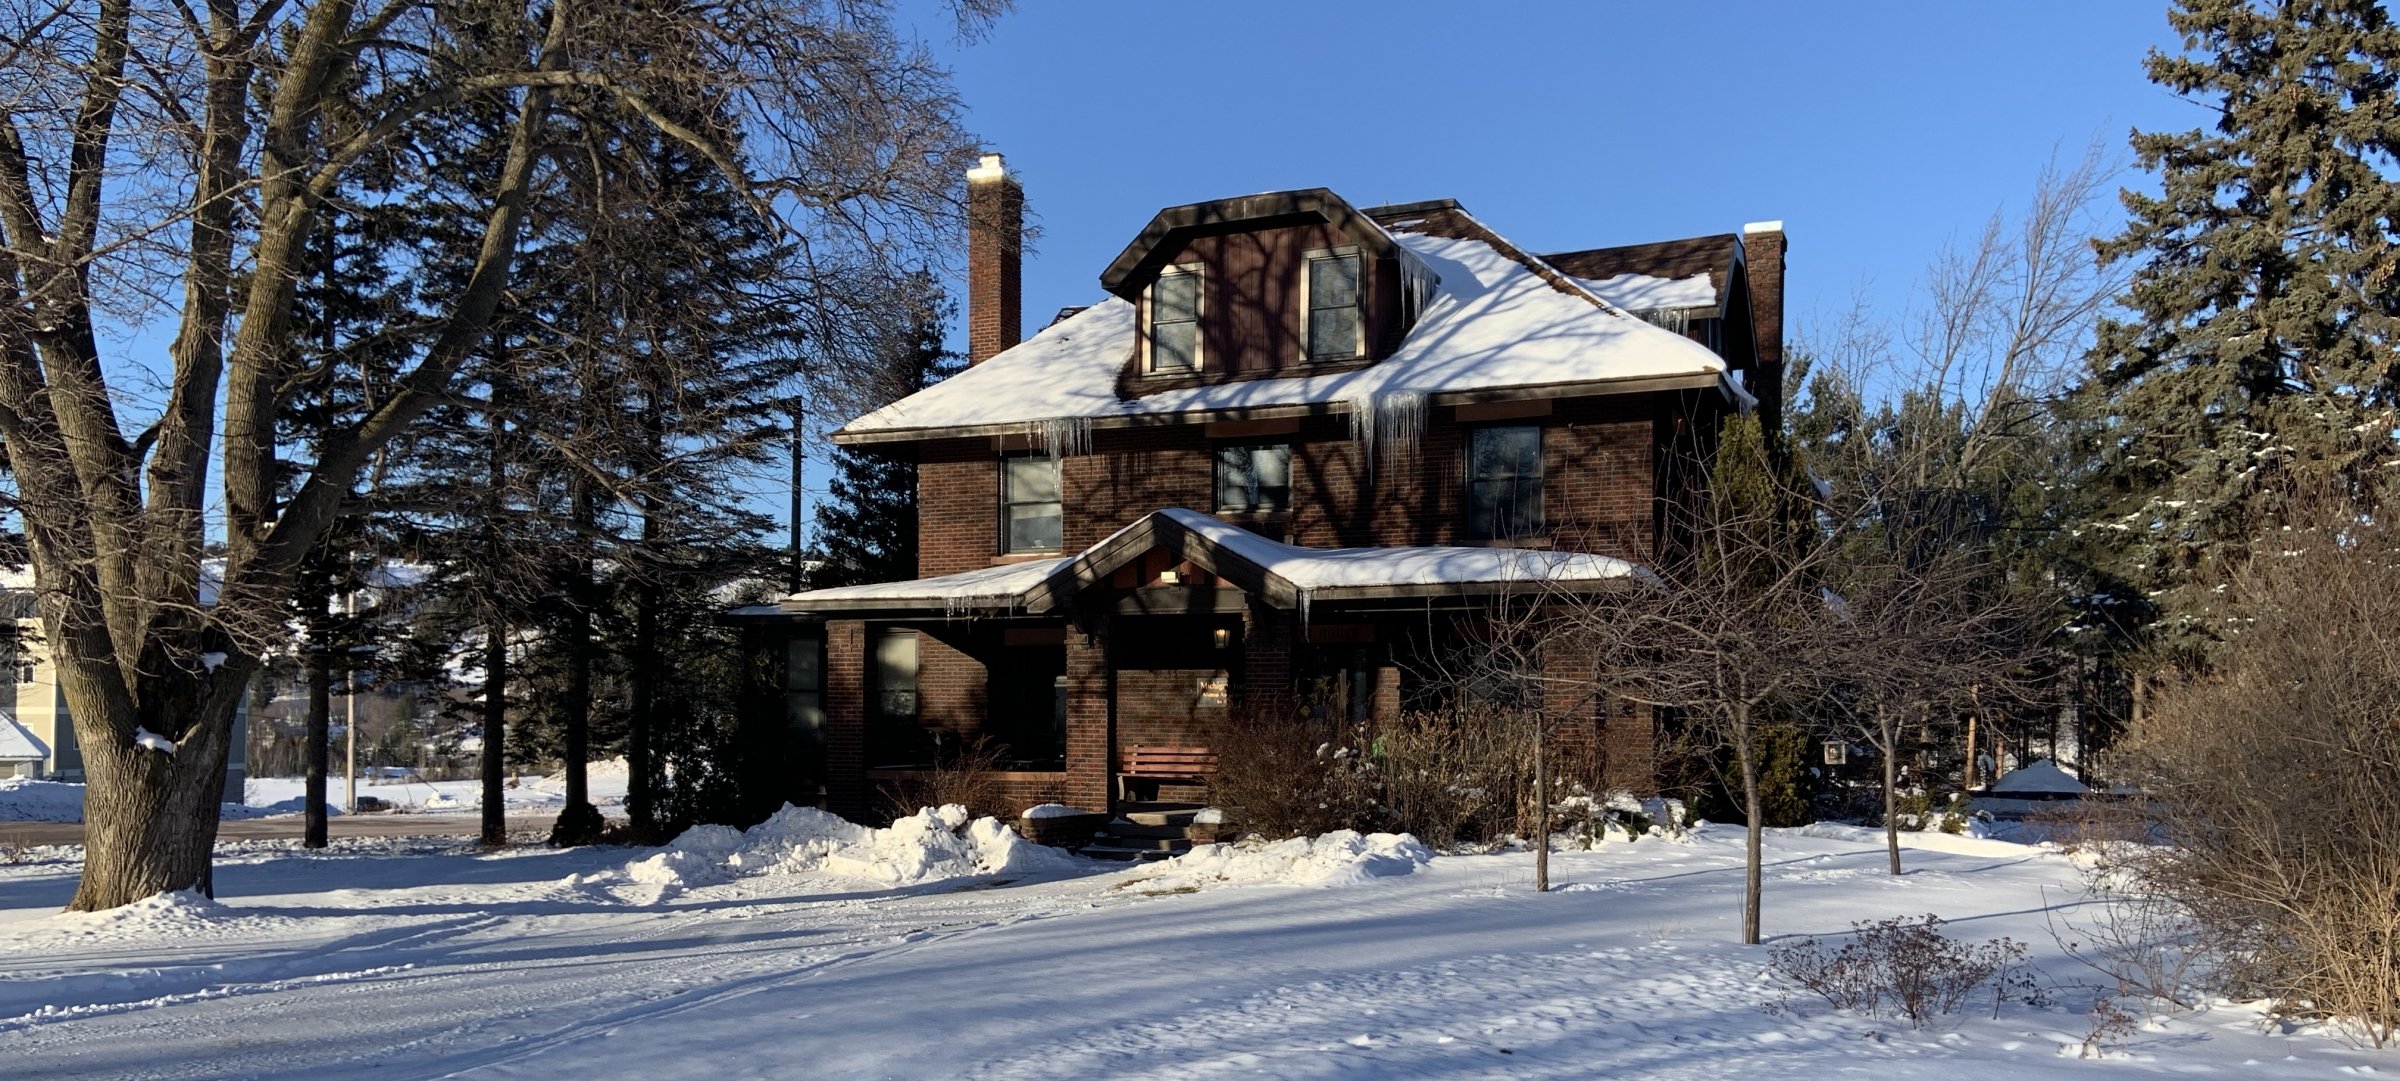 Michigan Tech Alumni House in winter